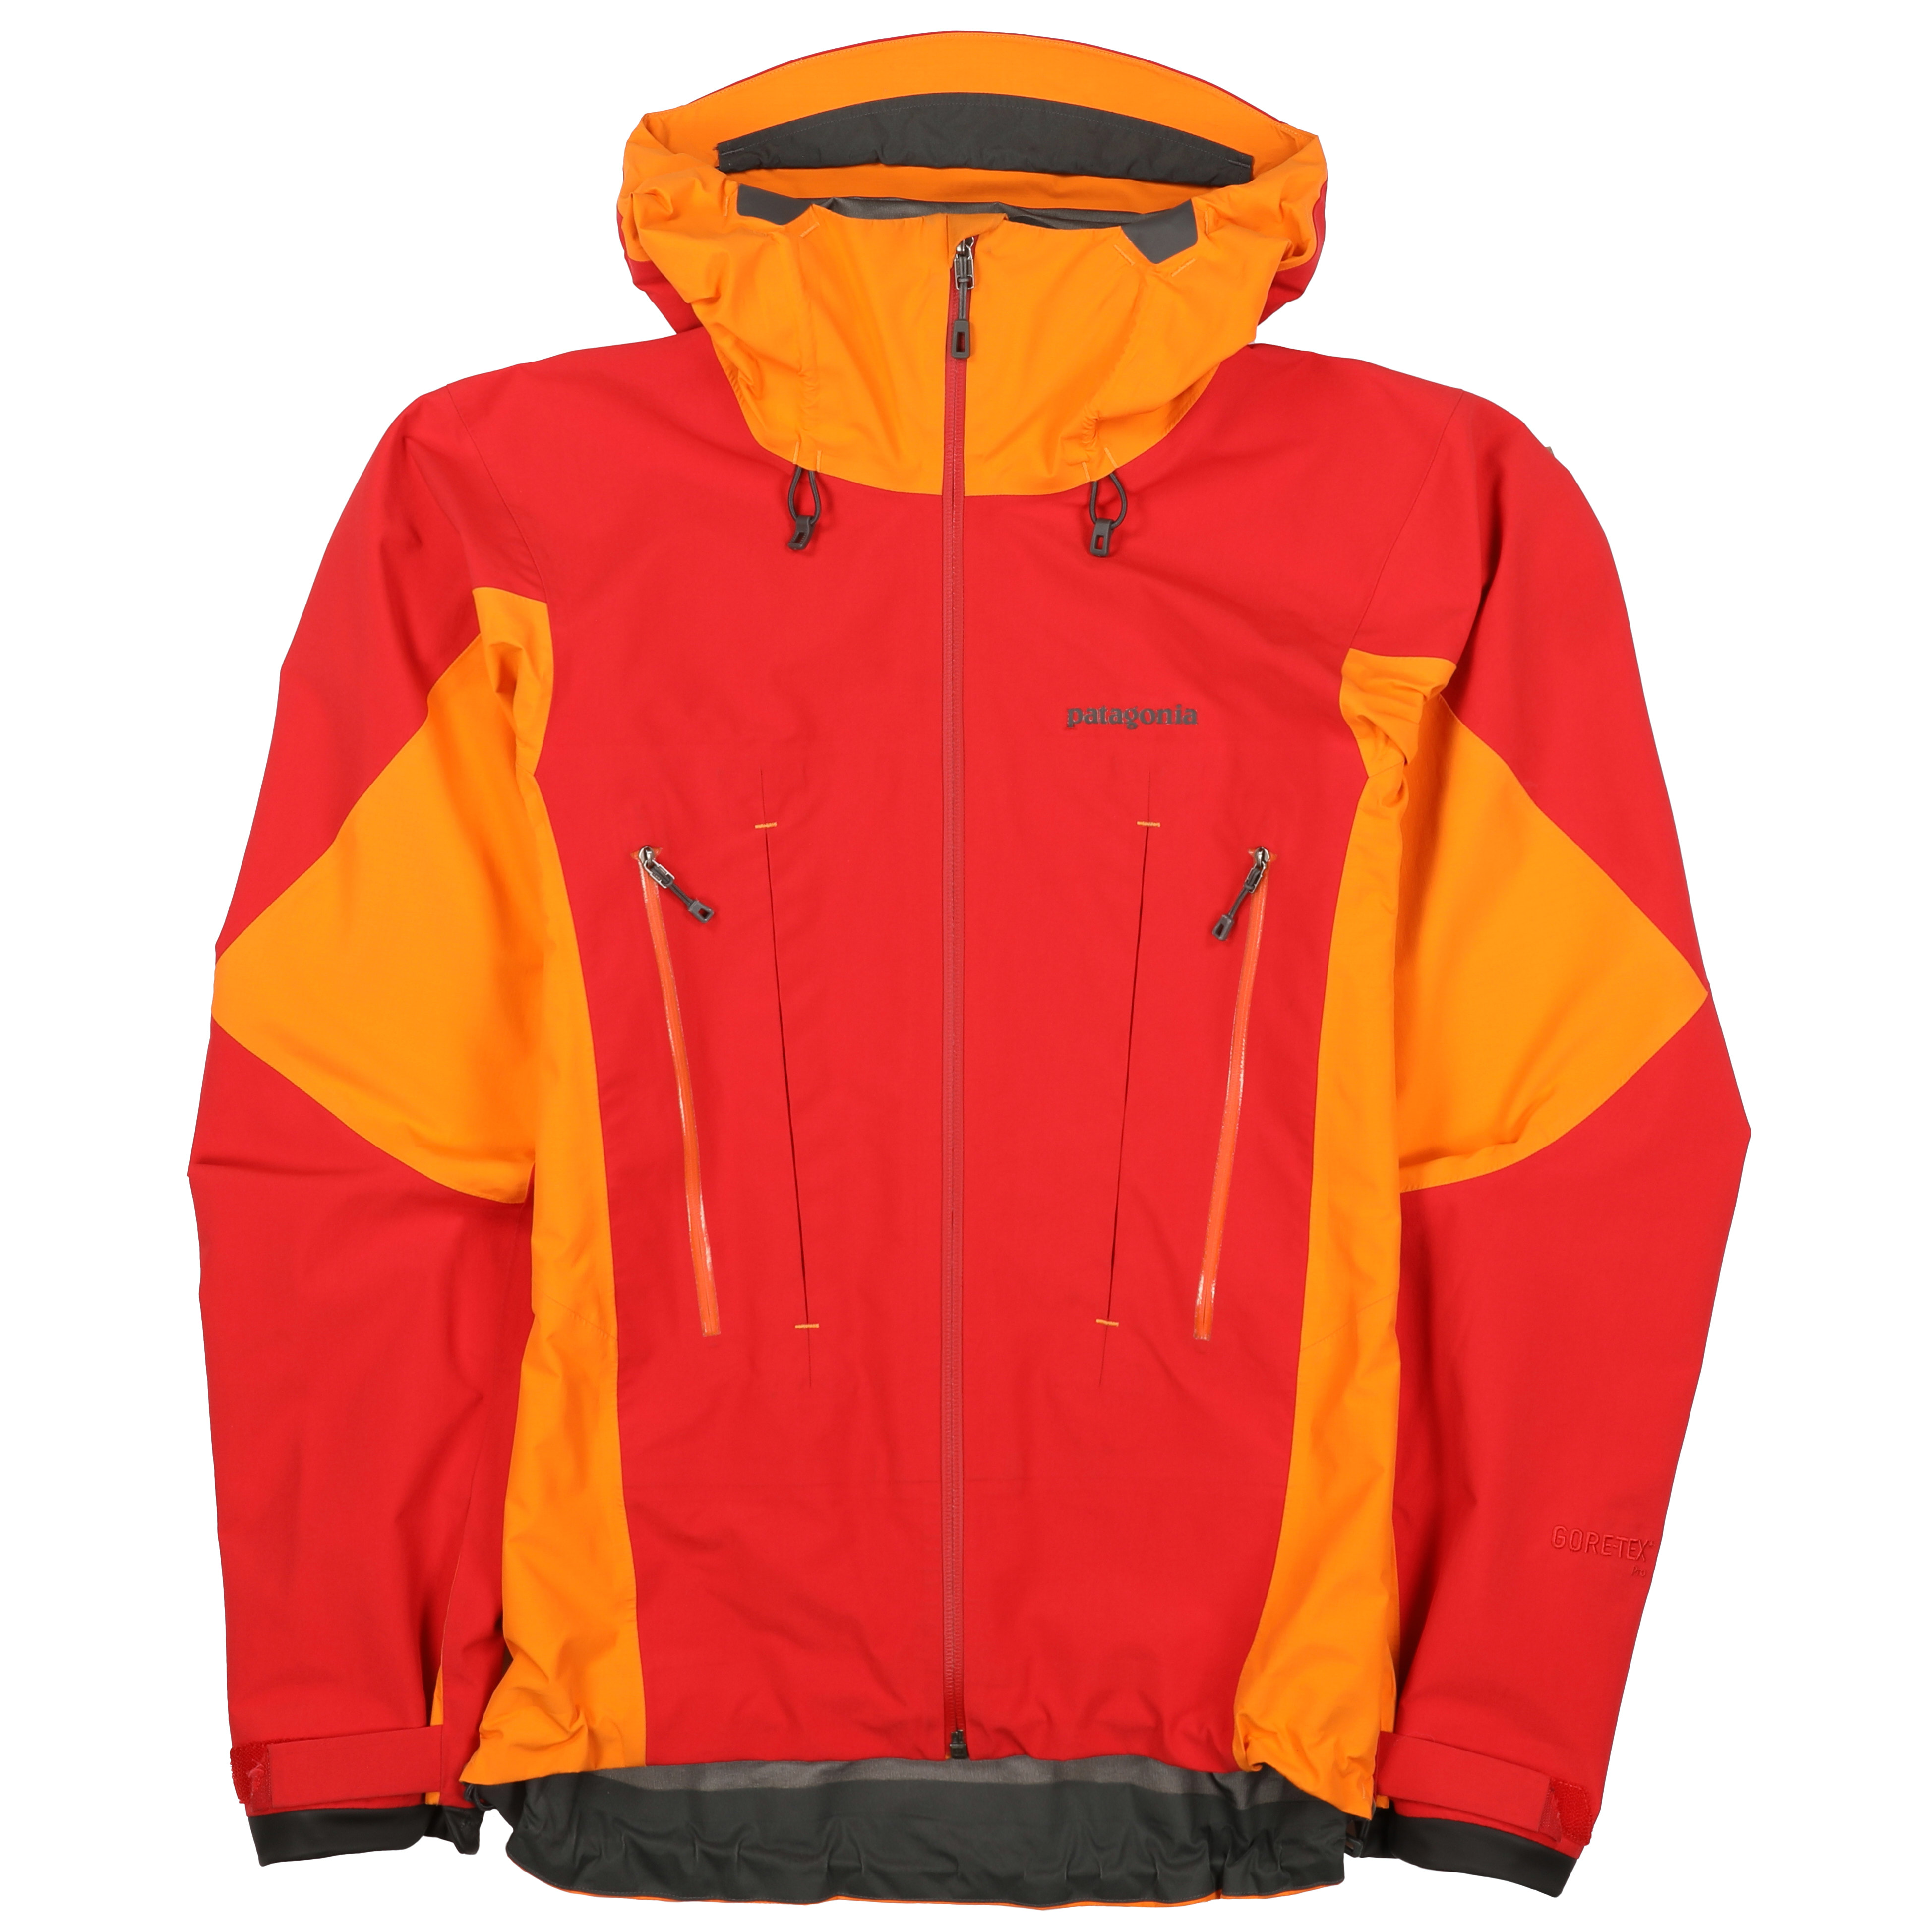 Patagonia Worn Wear Men's Super Alpine Jacket Forge Grey W/Forge